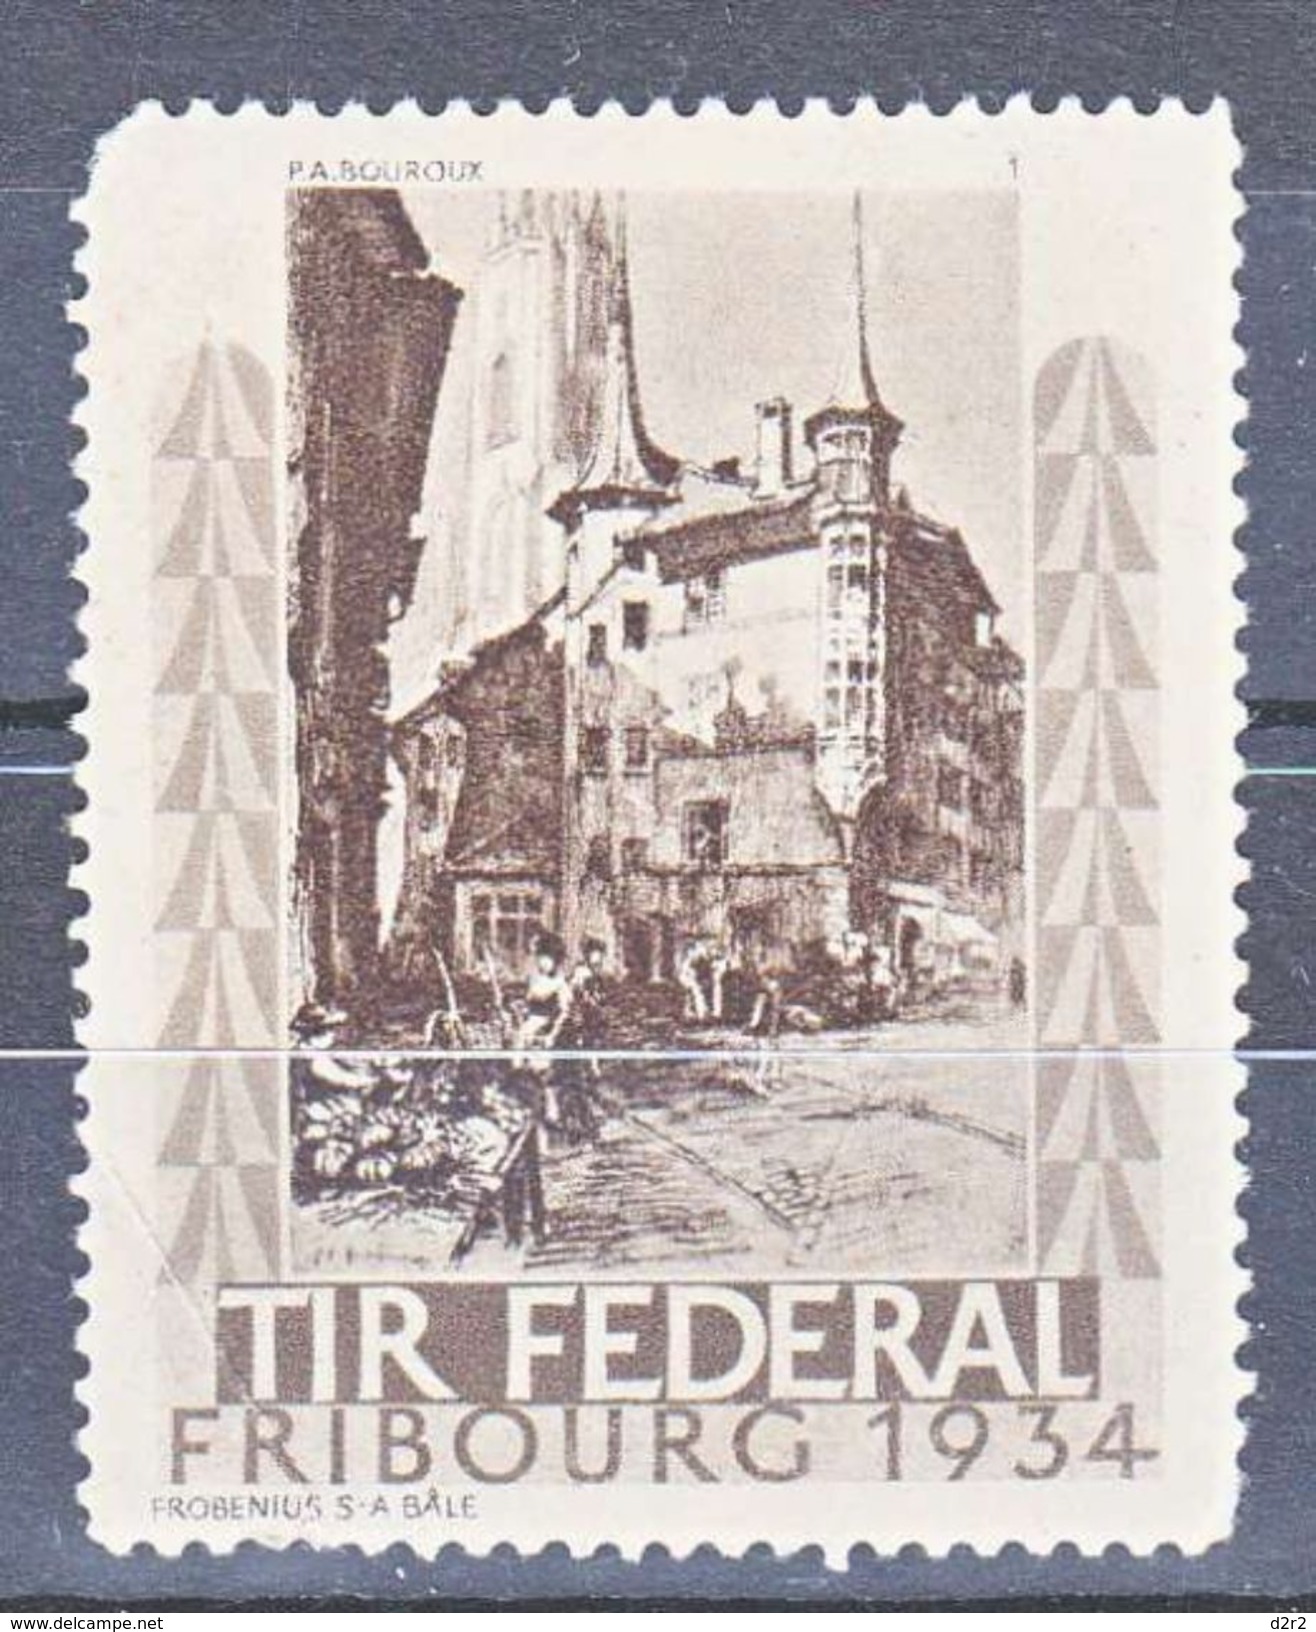 TIR FEDERAL - FRIBOURG 1934 - P.A. BOUROUX - V/IMAGE - Erinnophilie